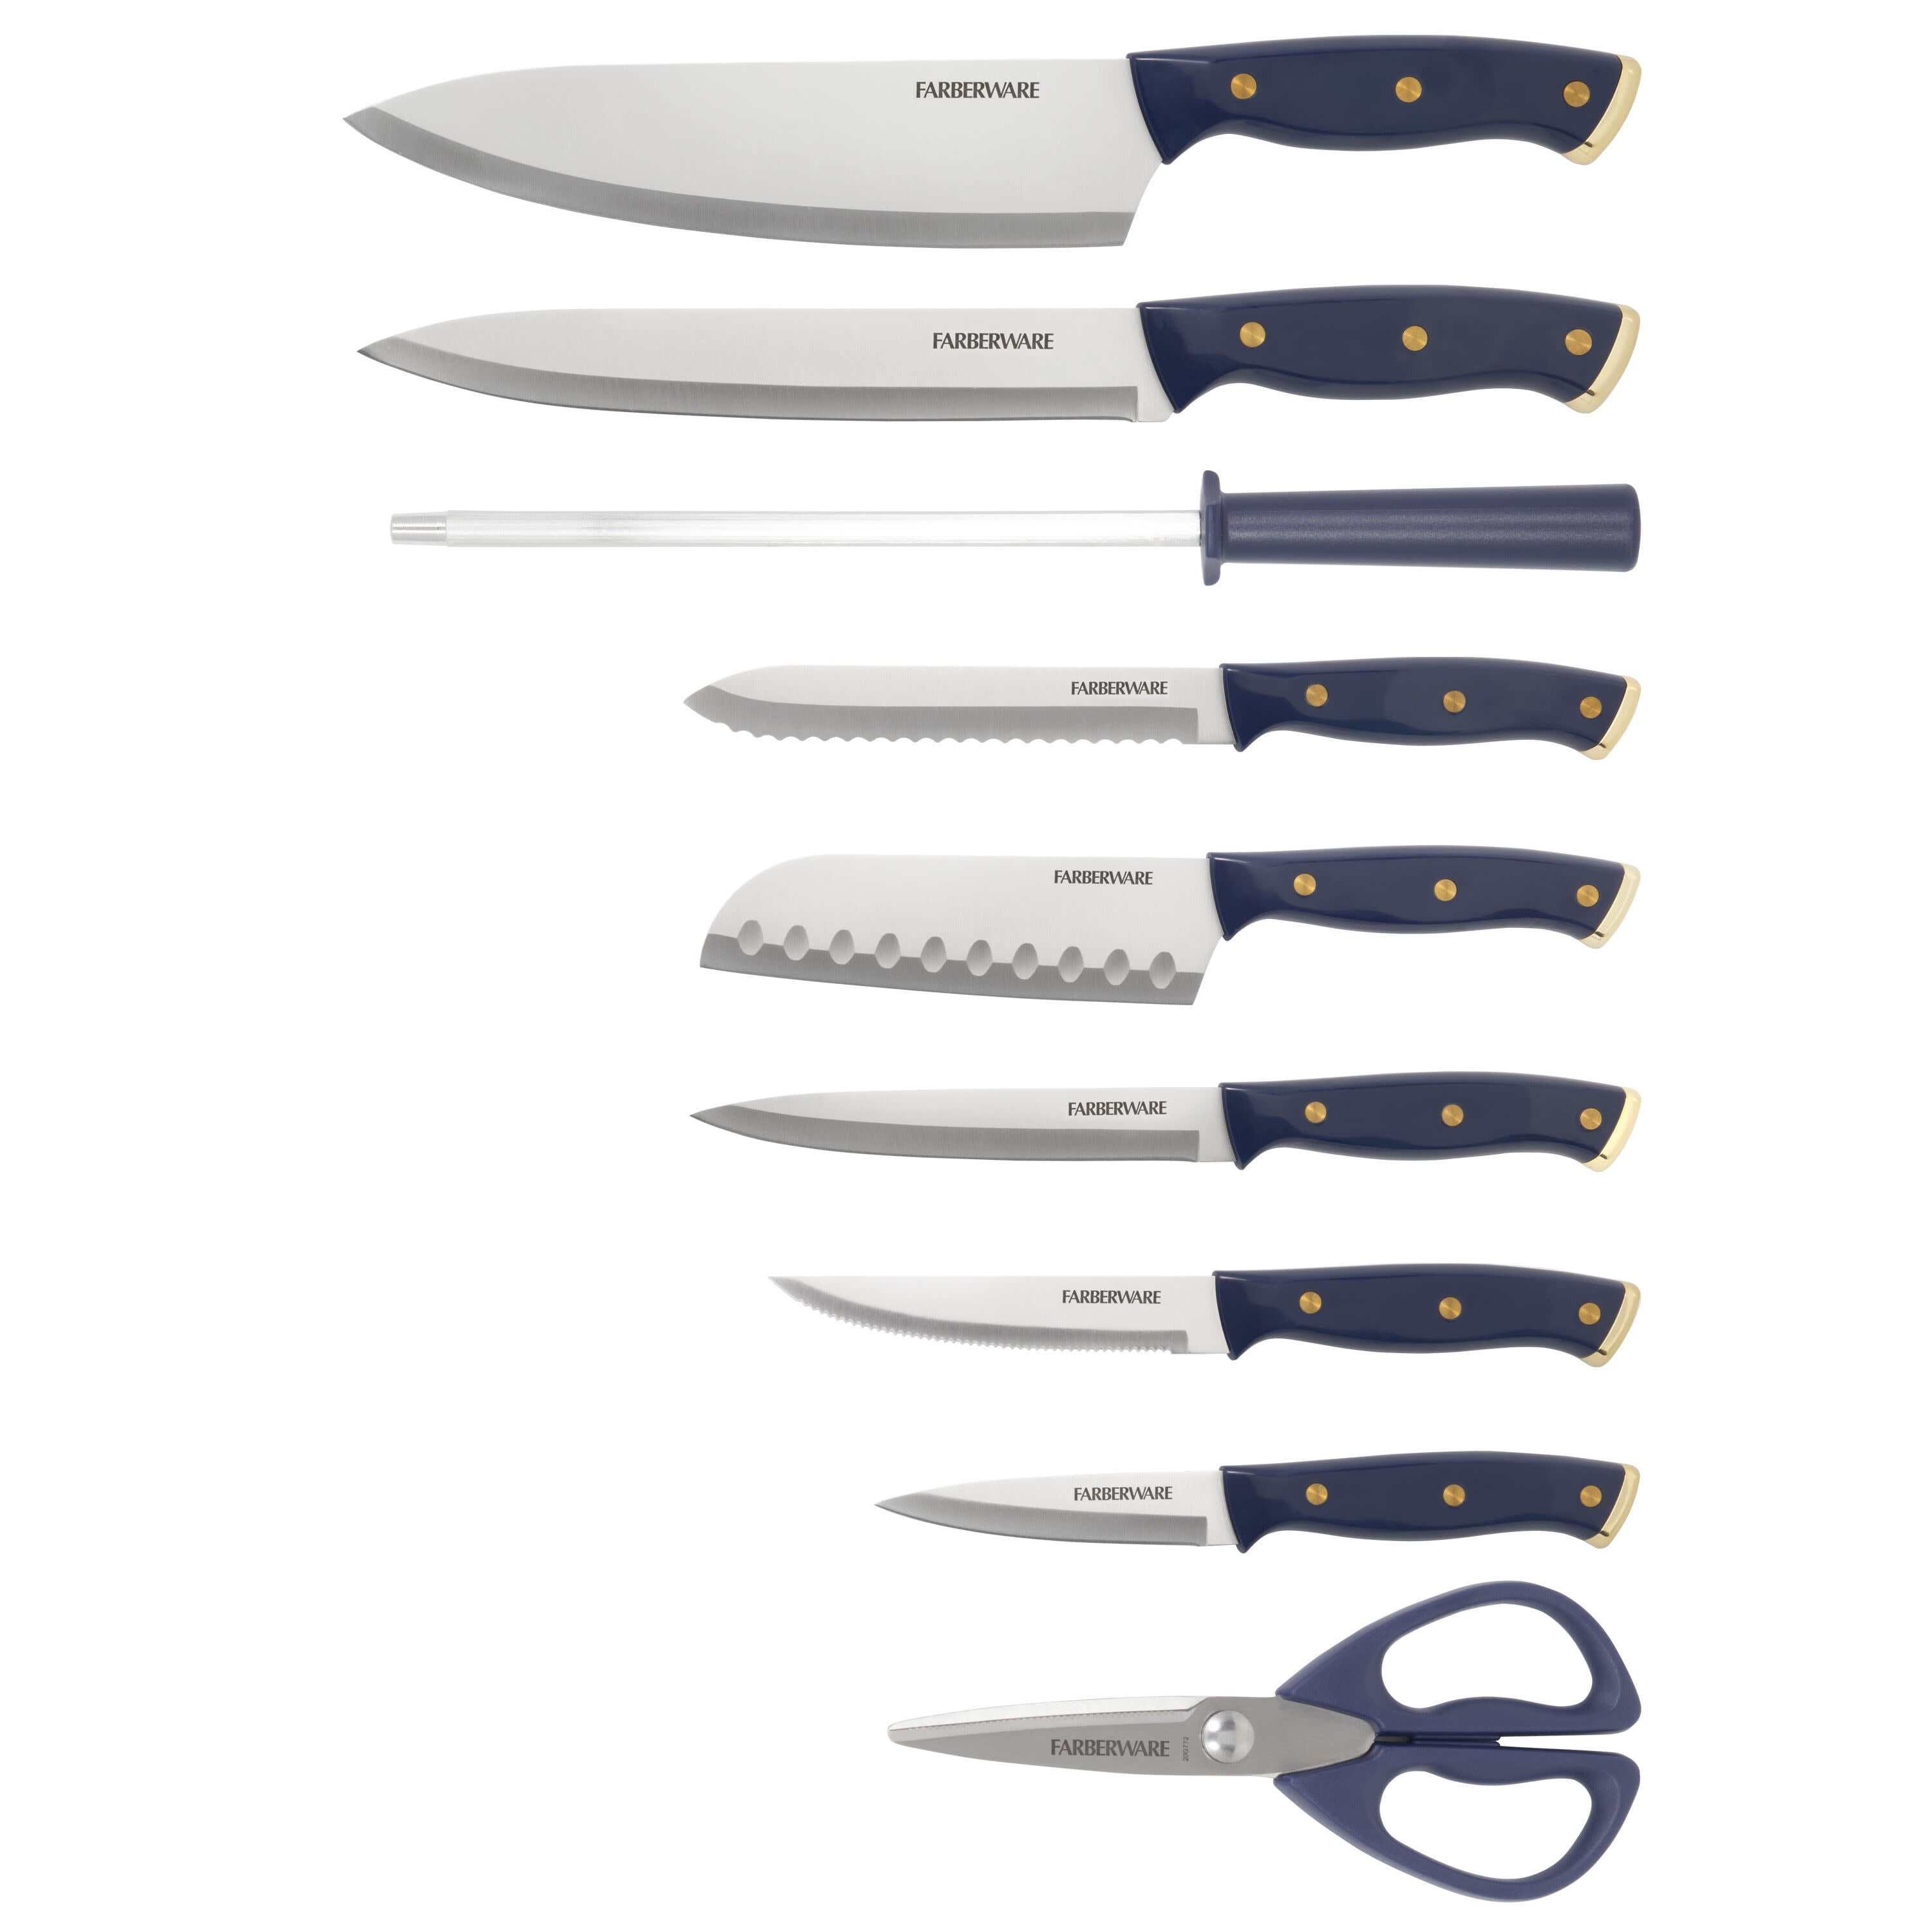 Fingerhut - Farberware 15-Pc. Knife Block Set - Navy Blue/Goldtone